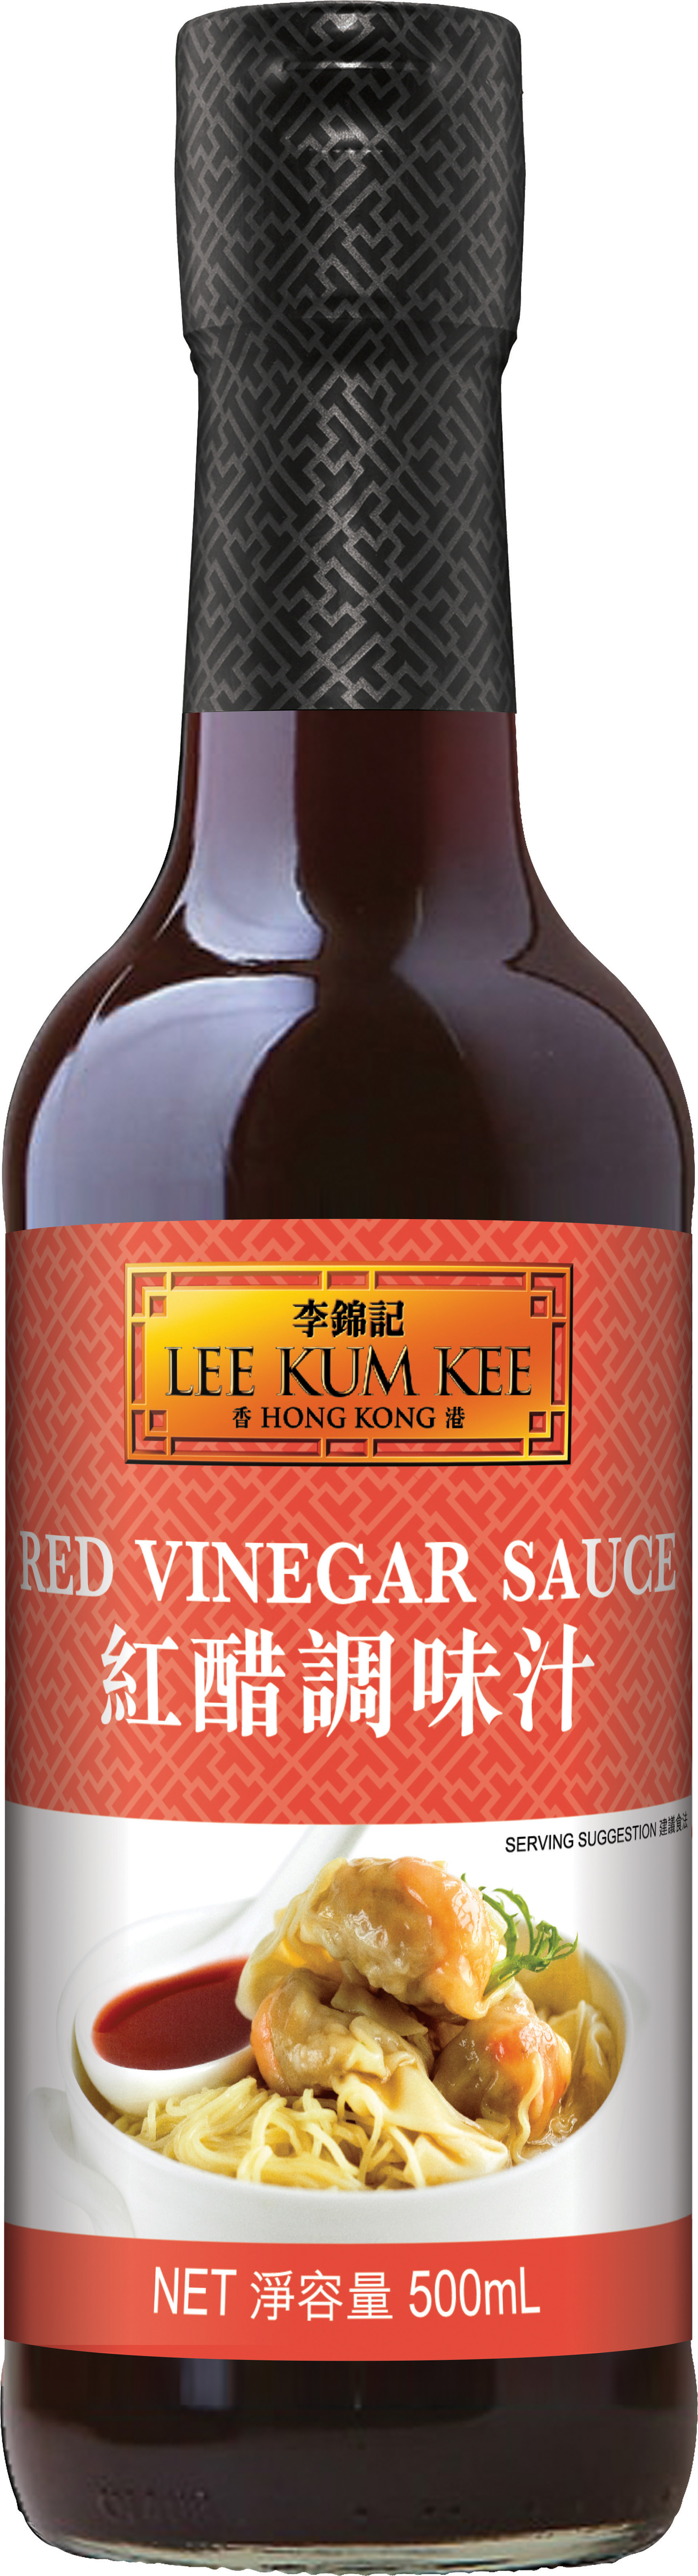 Red Vinegar Sauce 500ml